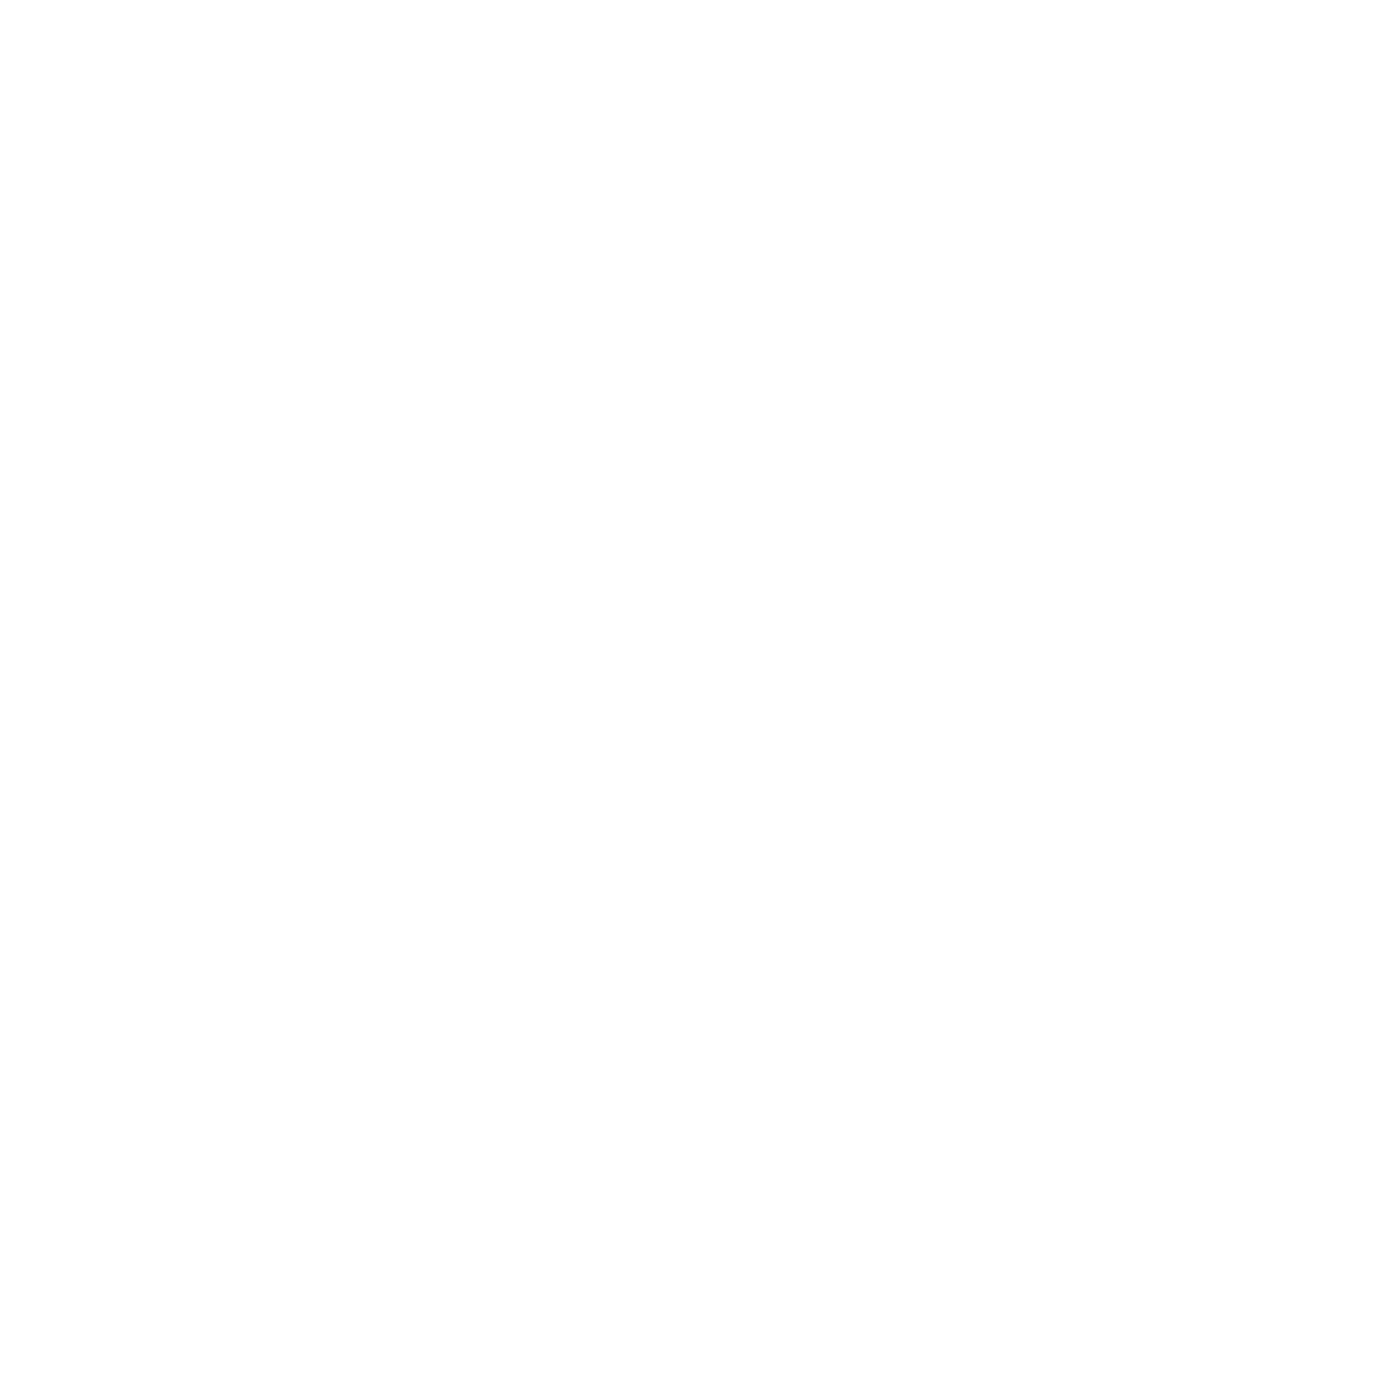 wm55 - HacksawGaming